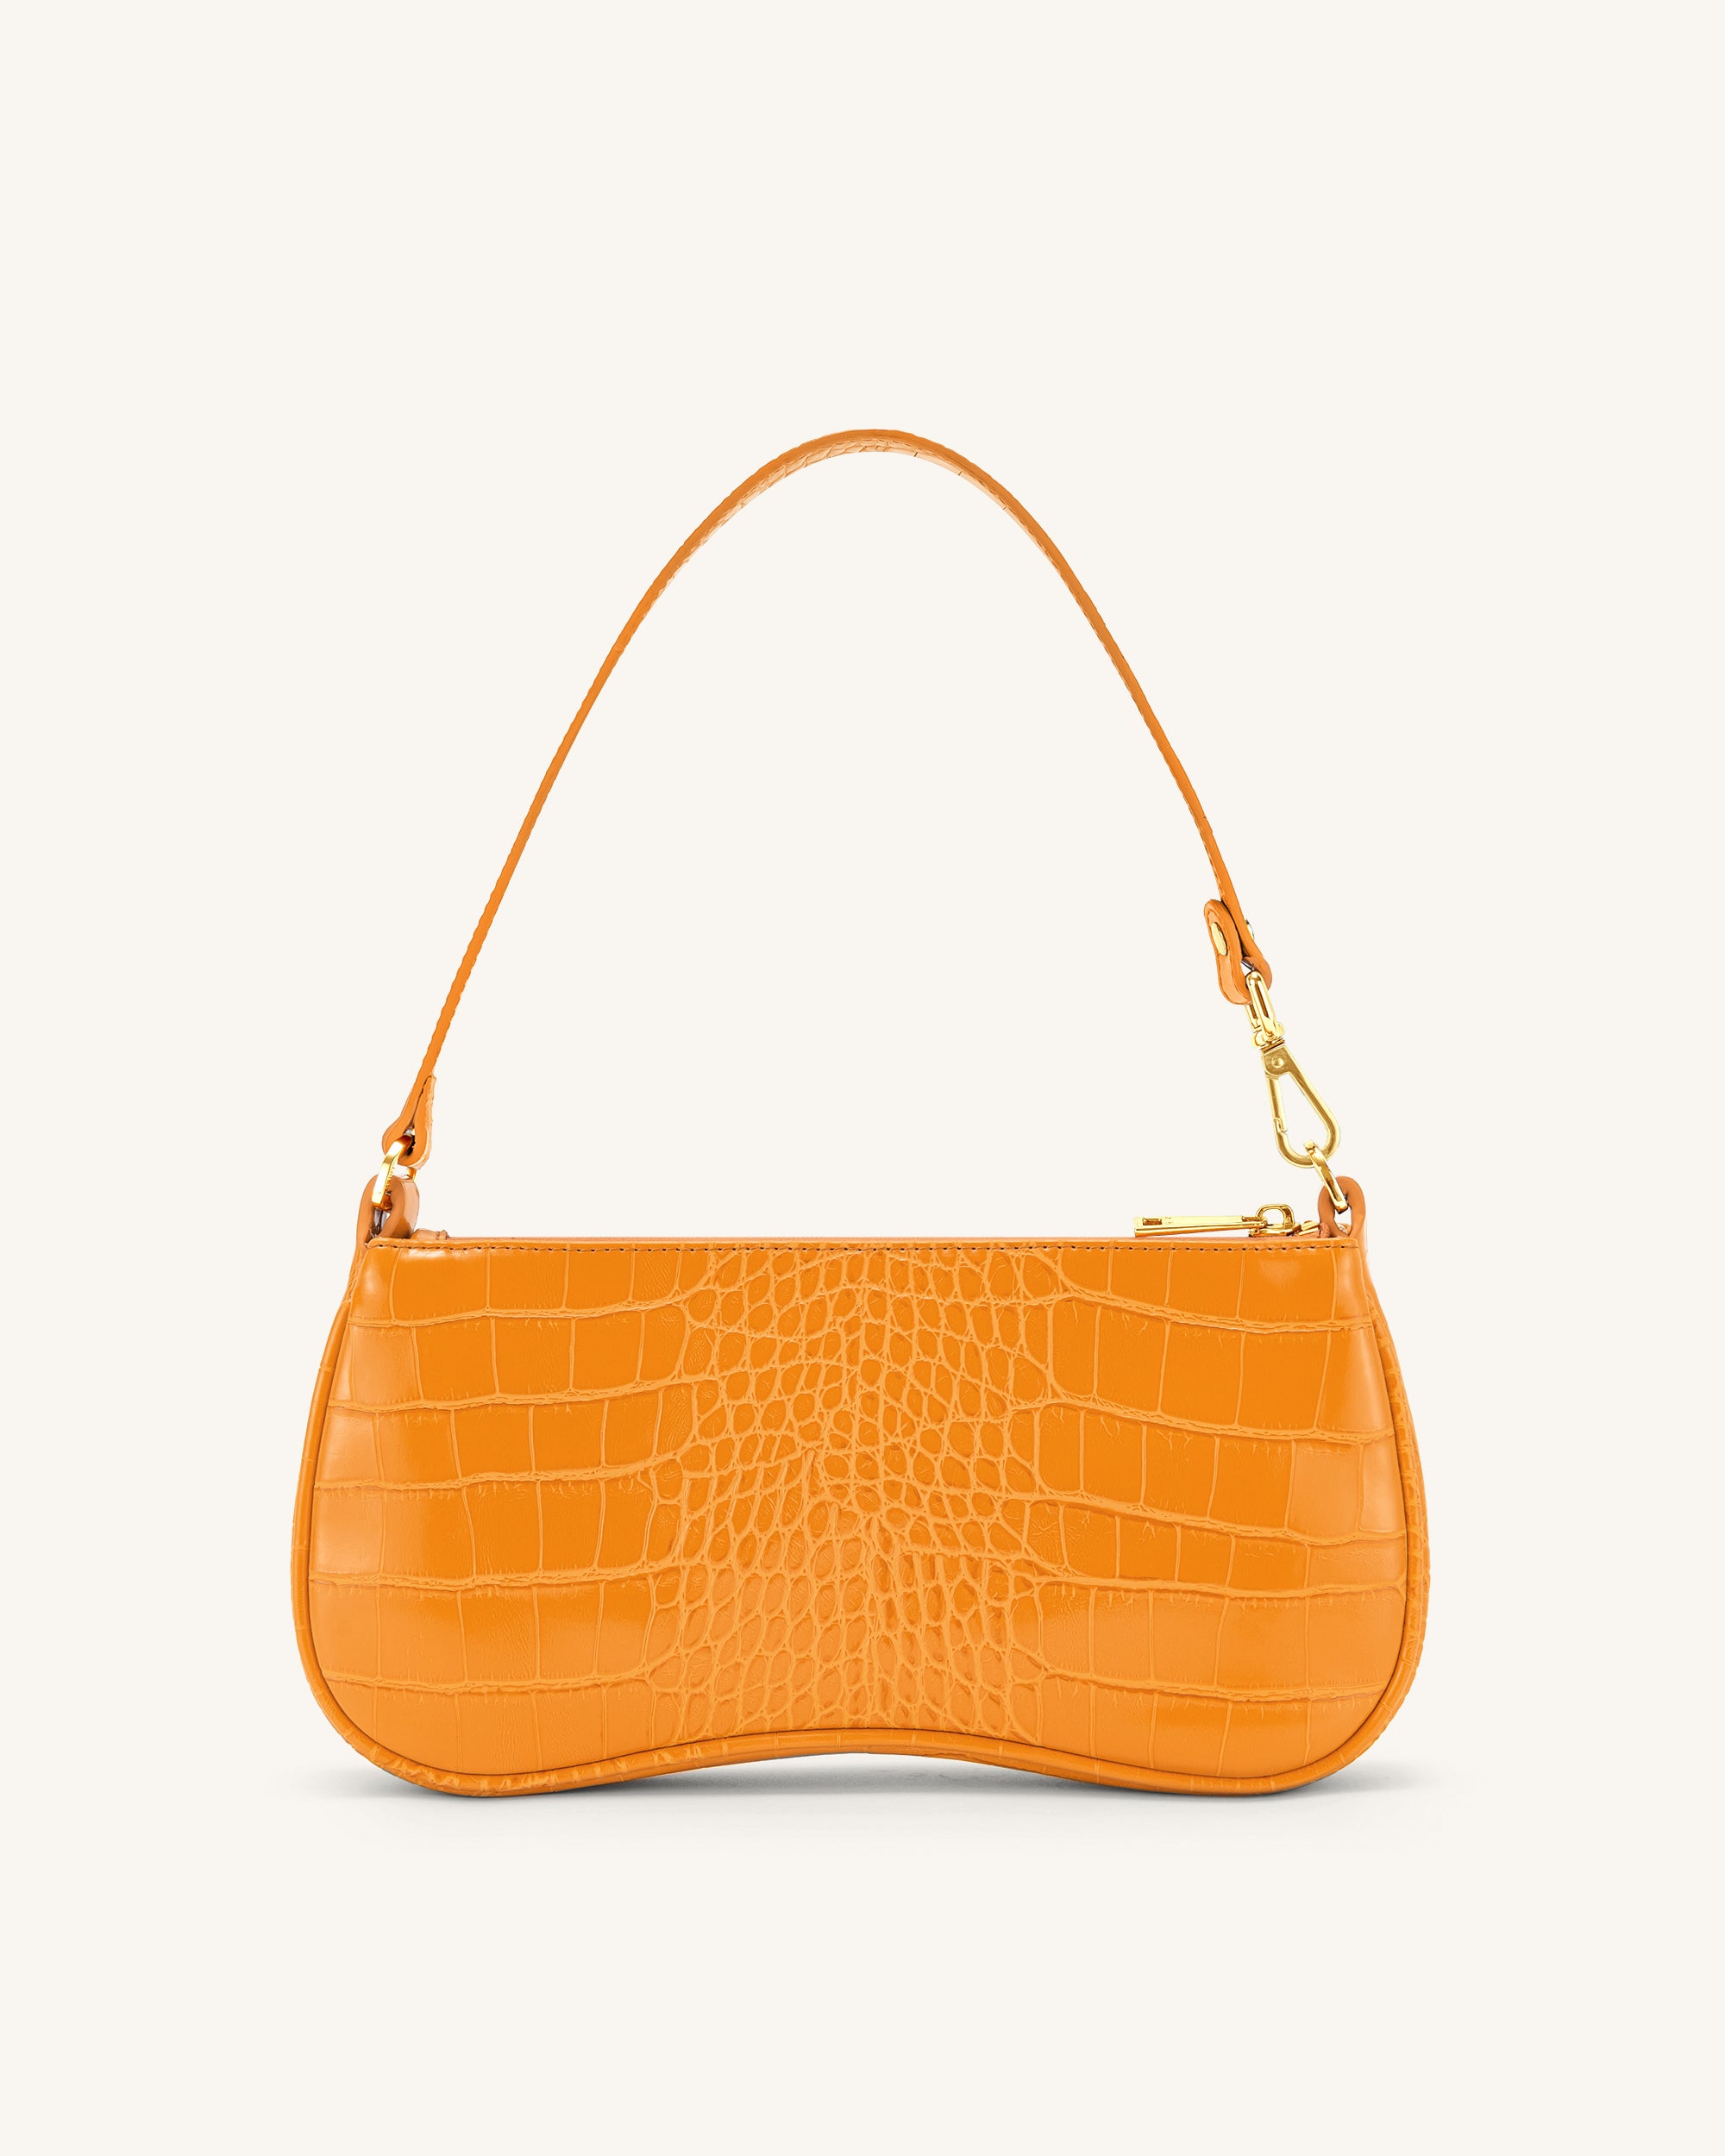 JW Pei - Authenticated Handbag - Brown Crocodile For Woman, Very Good condition